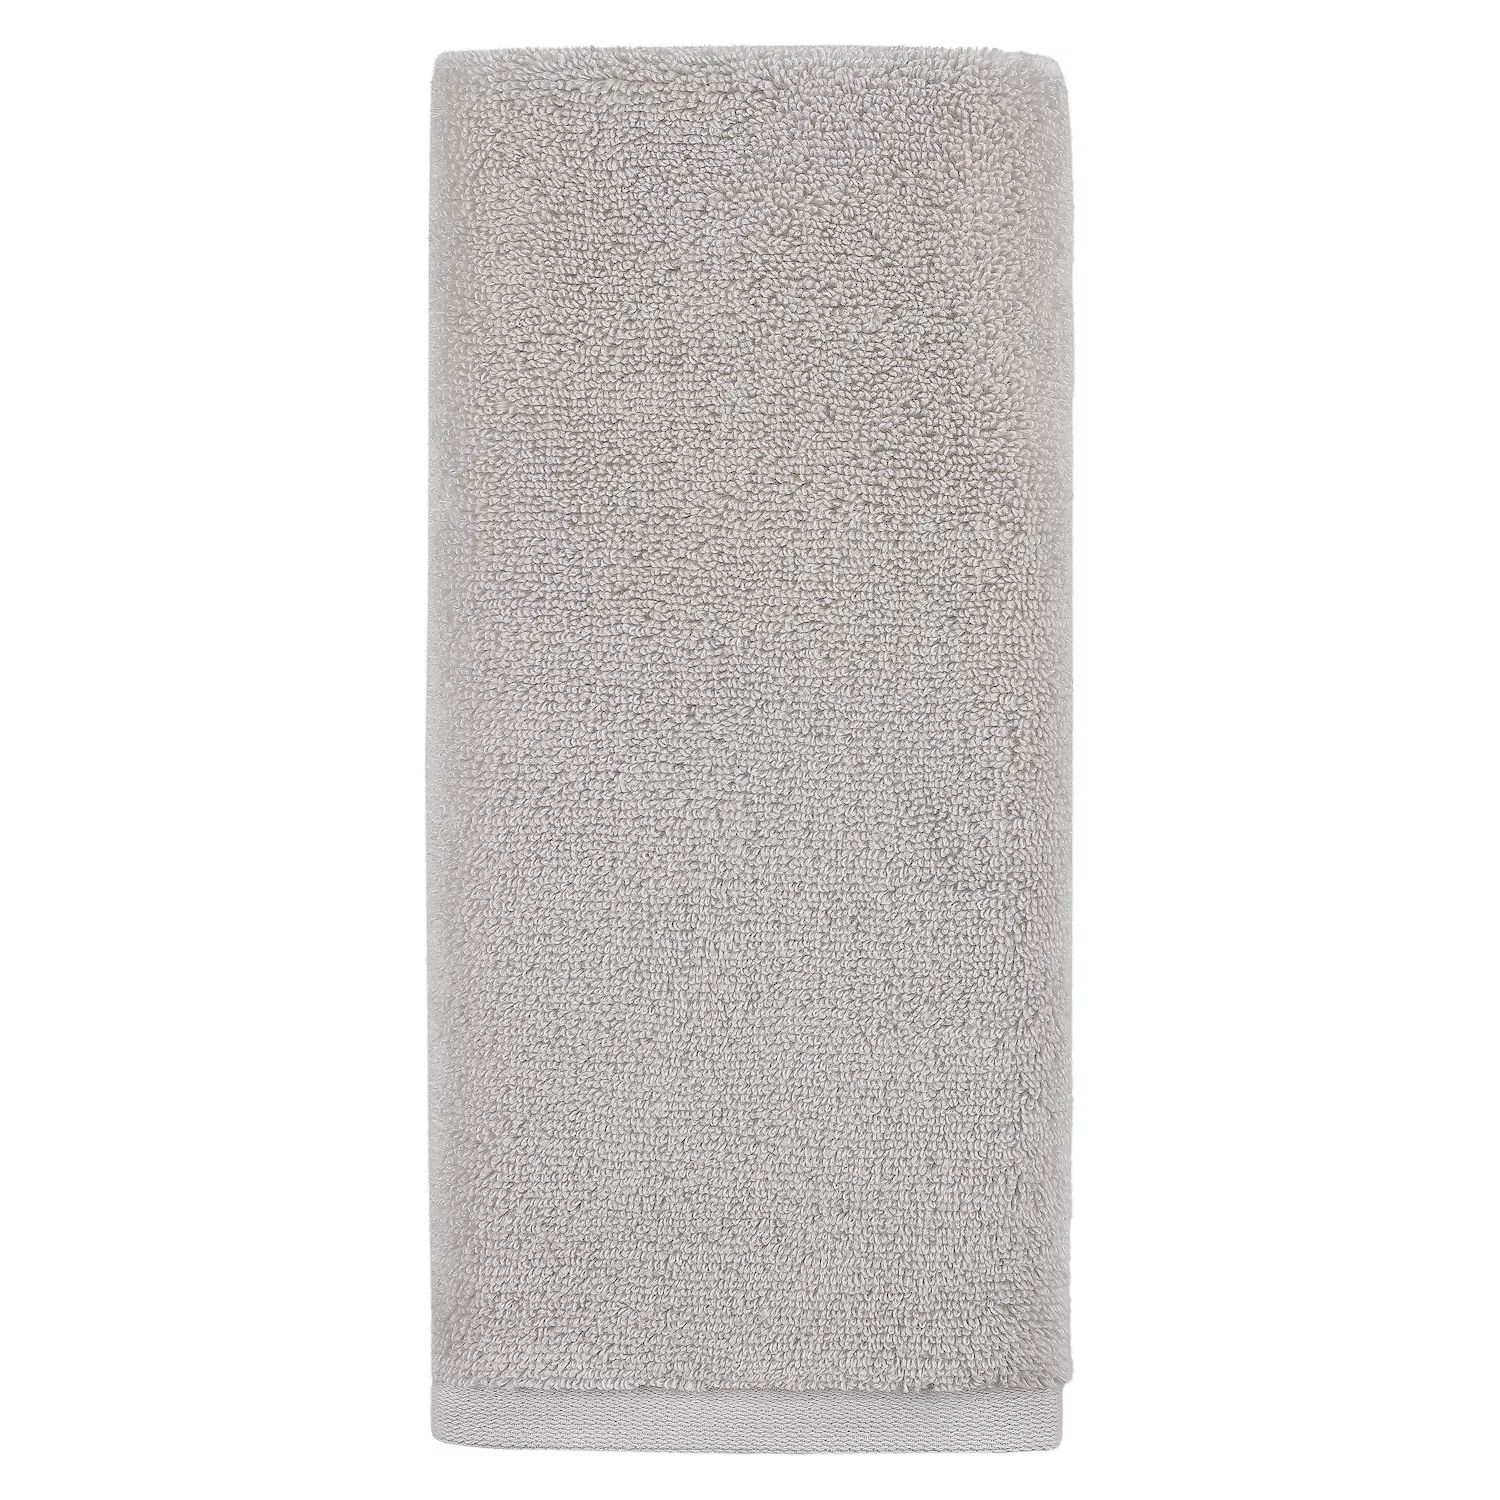 Супермягкое банное полотенце Sonoma Goods For Life платье megapolis сиэтл